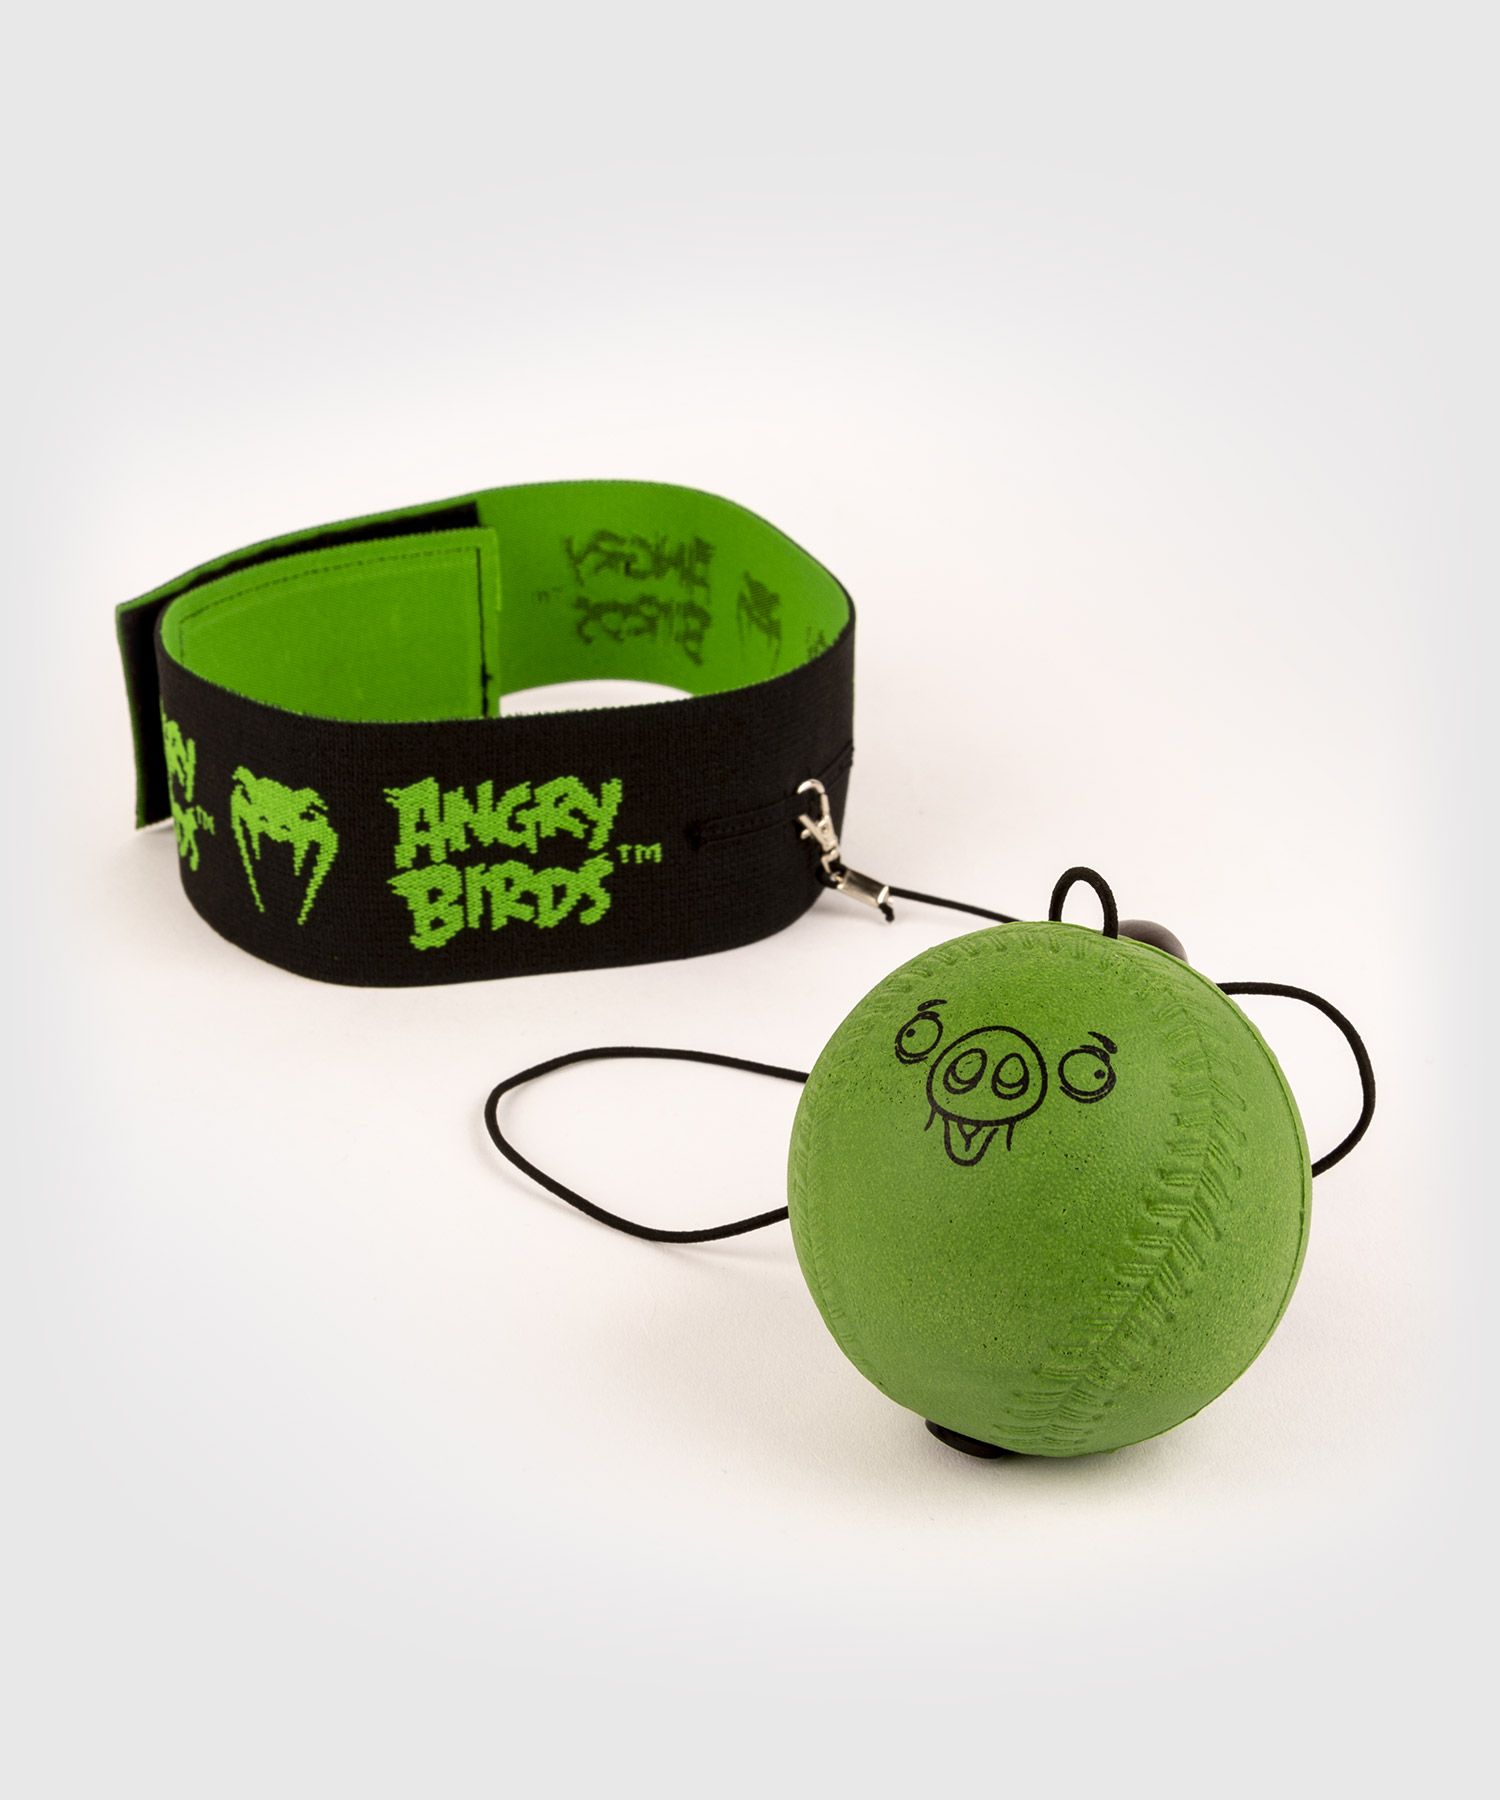 Reflex Ball Venum Angry Birds -  Pour Enfants - Vert